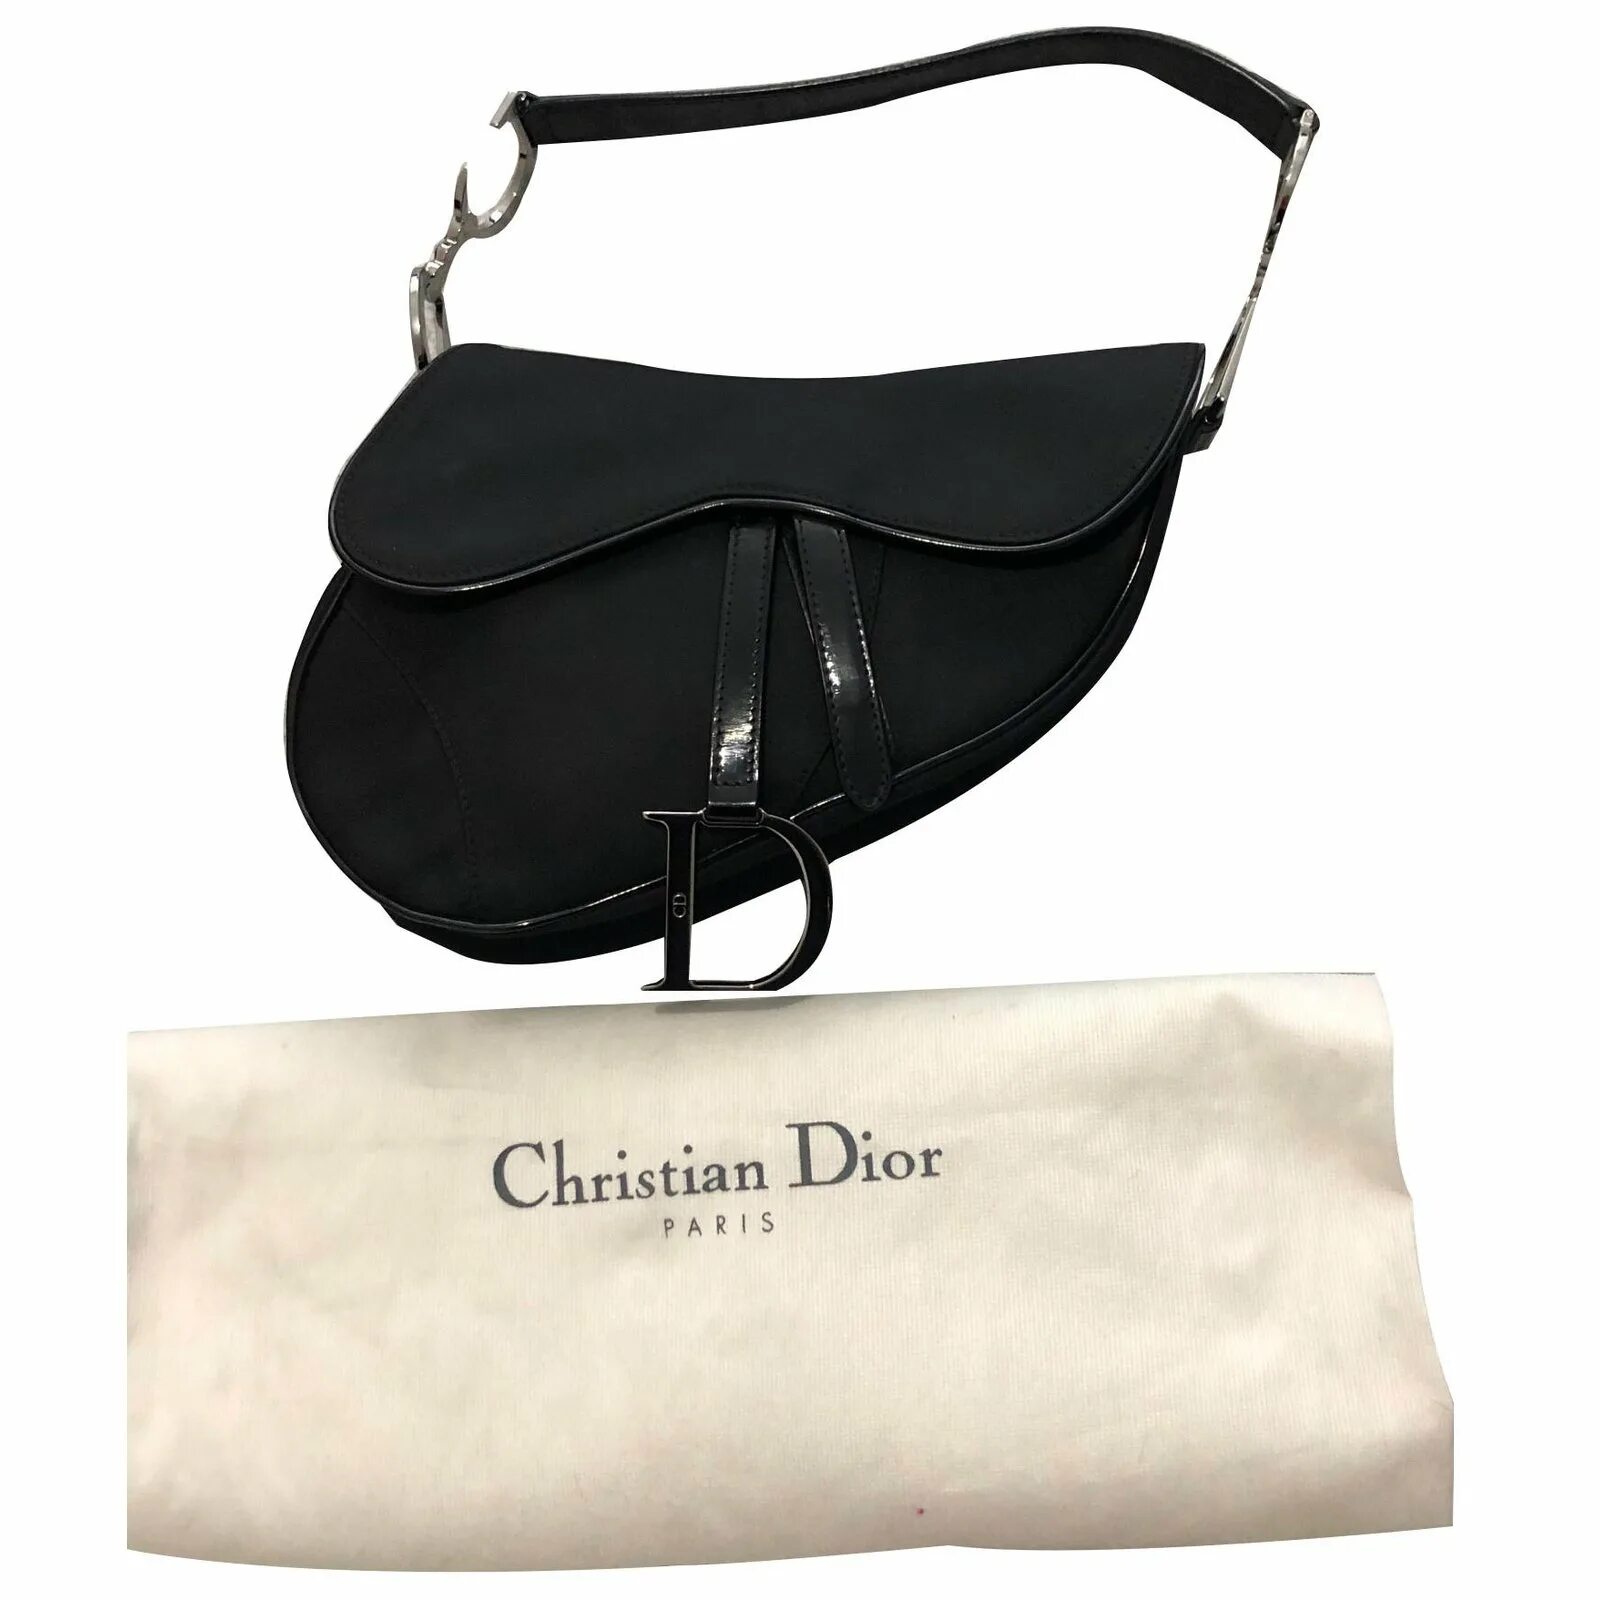 Сумка диор седло оригинал. Saddle Кристиан диор. Сумка Dior Saddle Black. Christian Dior сумки Saddle черная. Christian Dior седло.